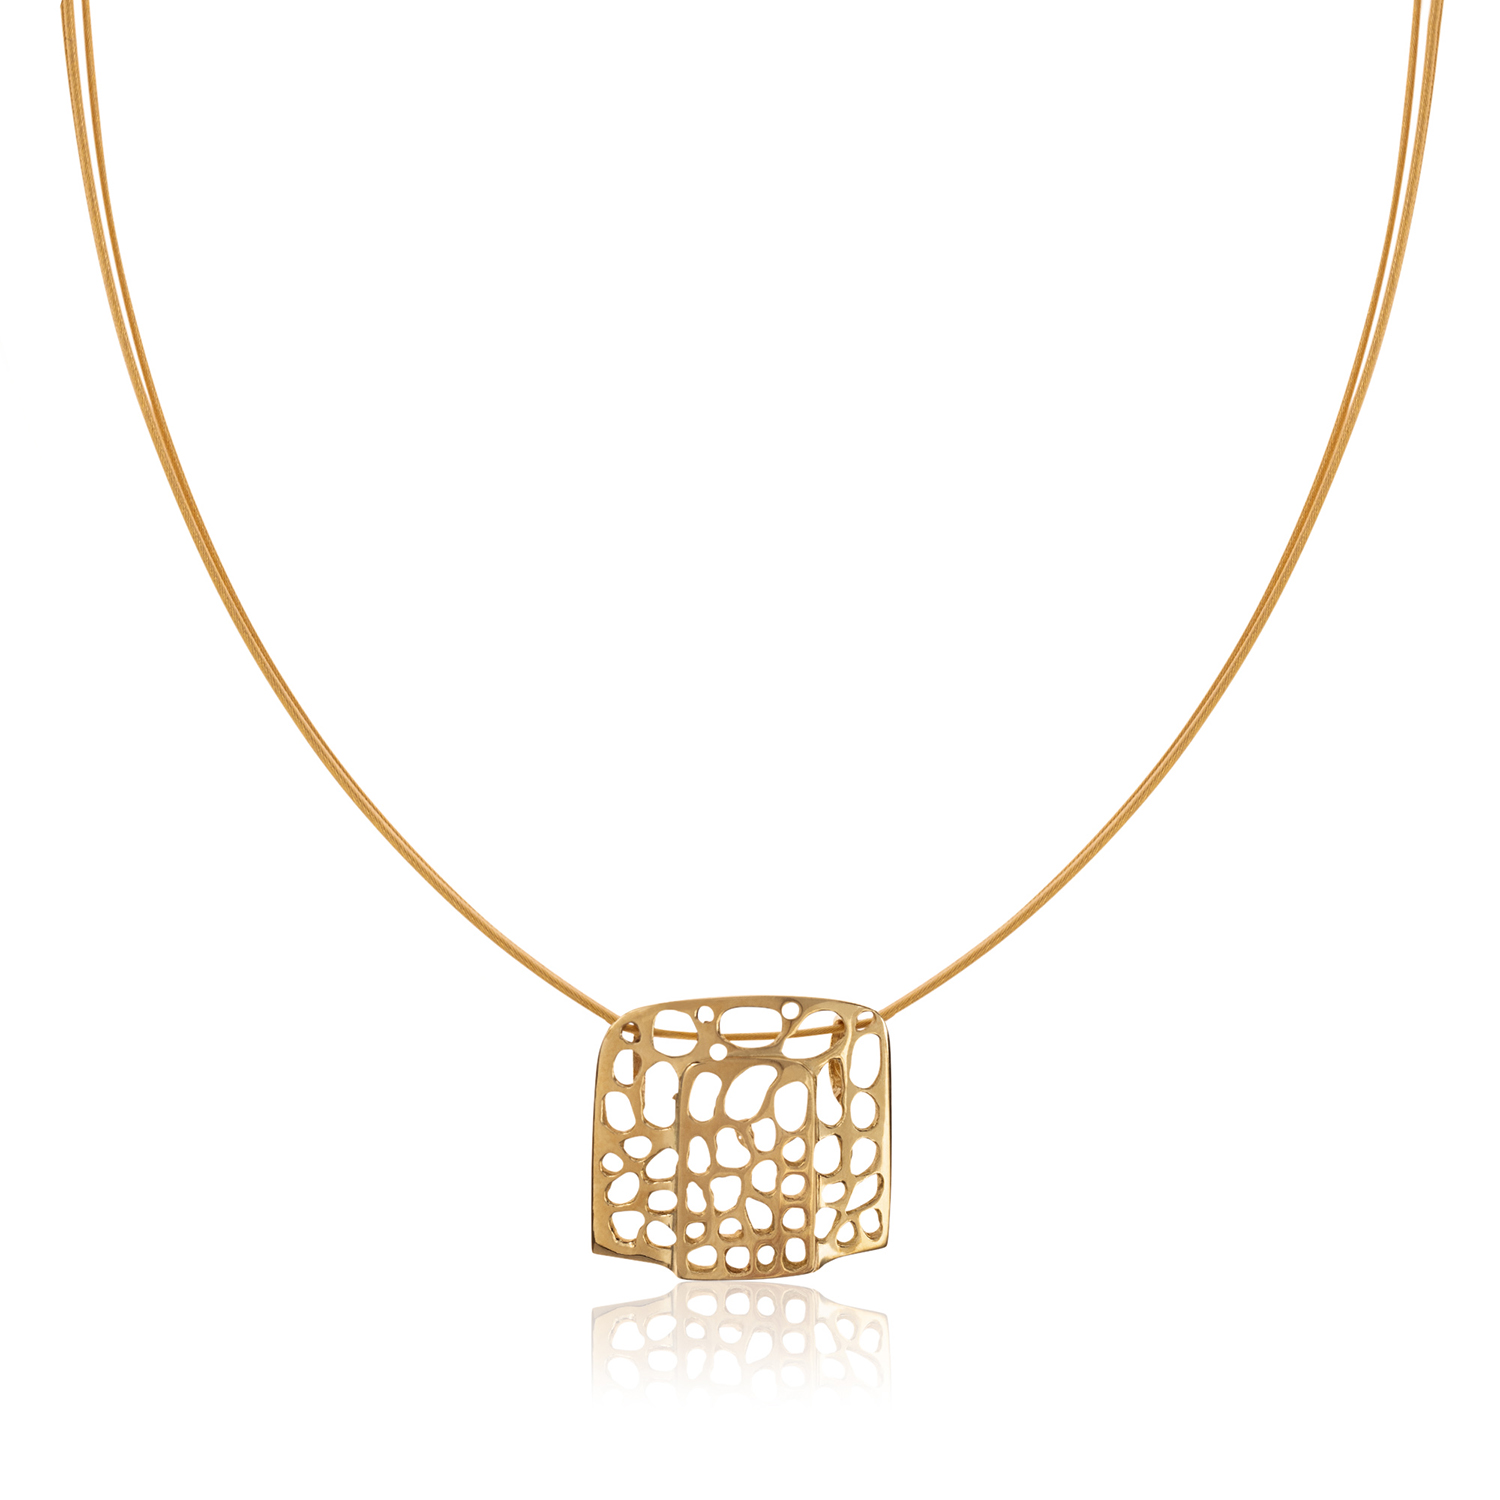 Pedrera's gold pendant